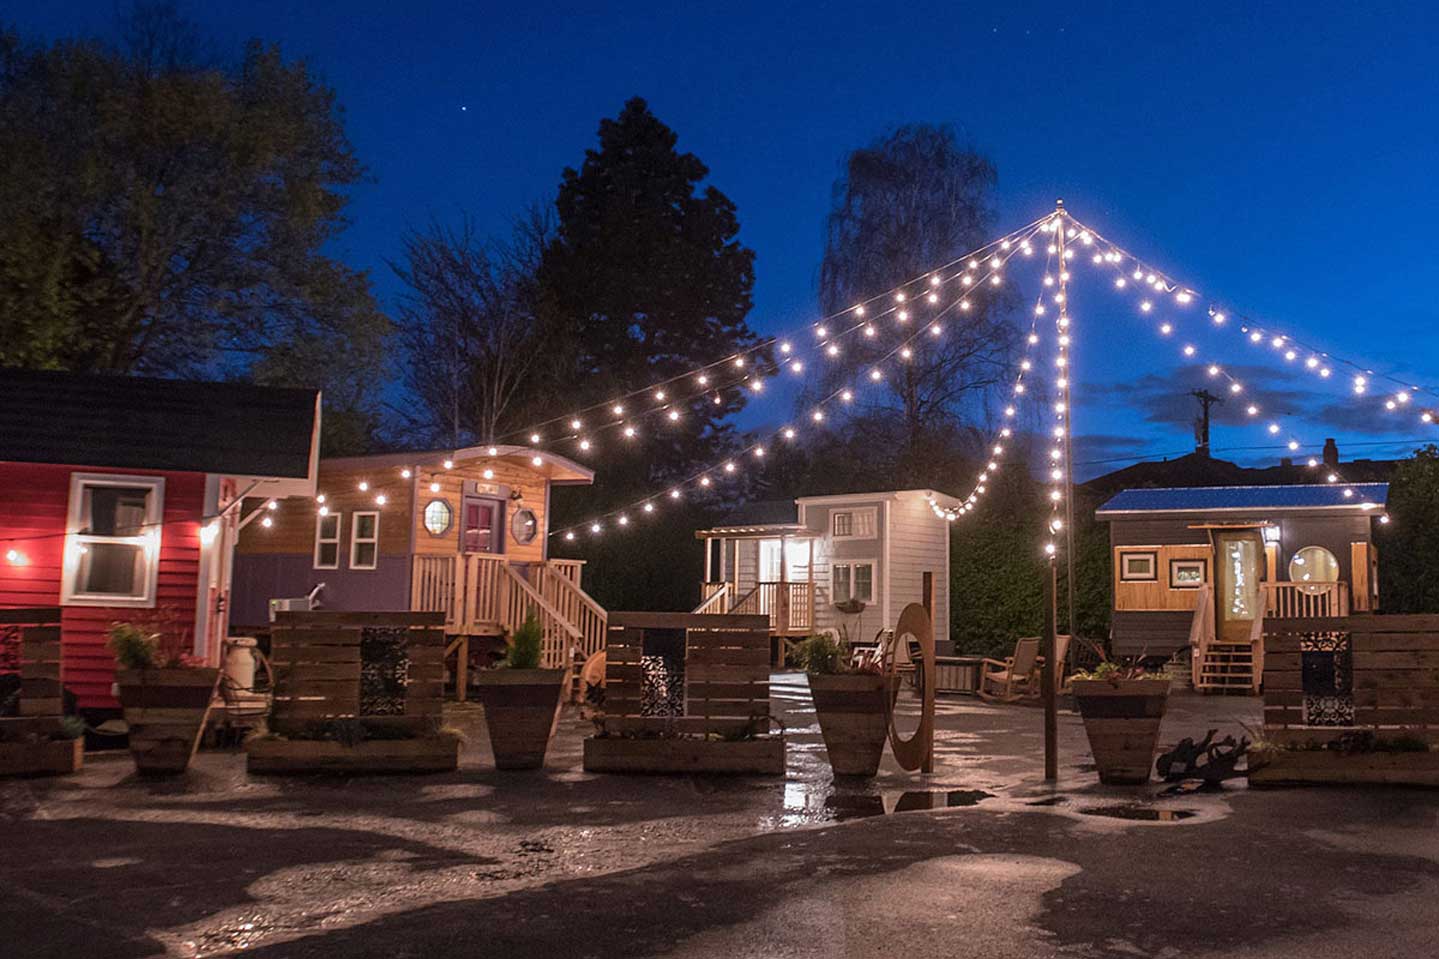 A tiny house hotel at night light by festive lights